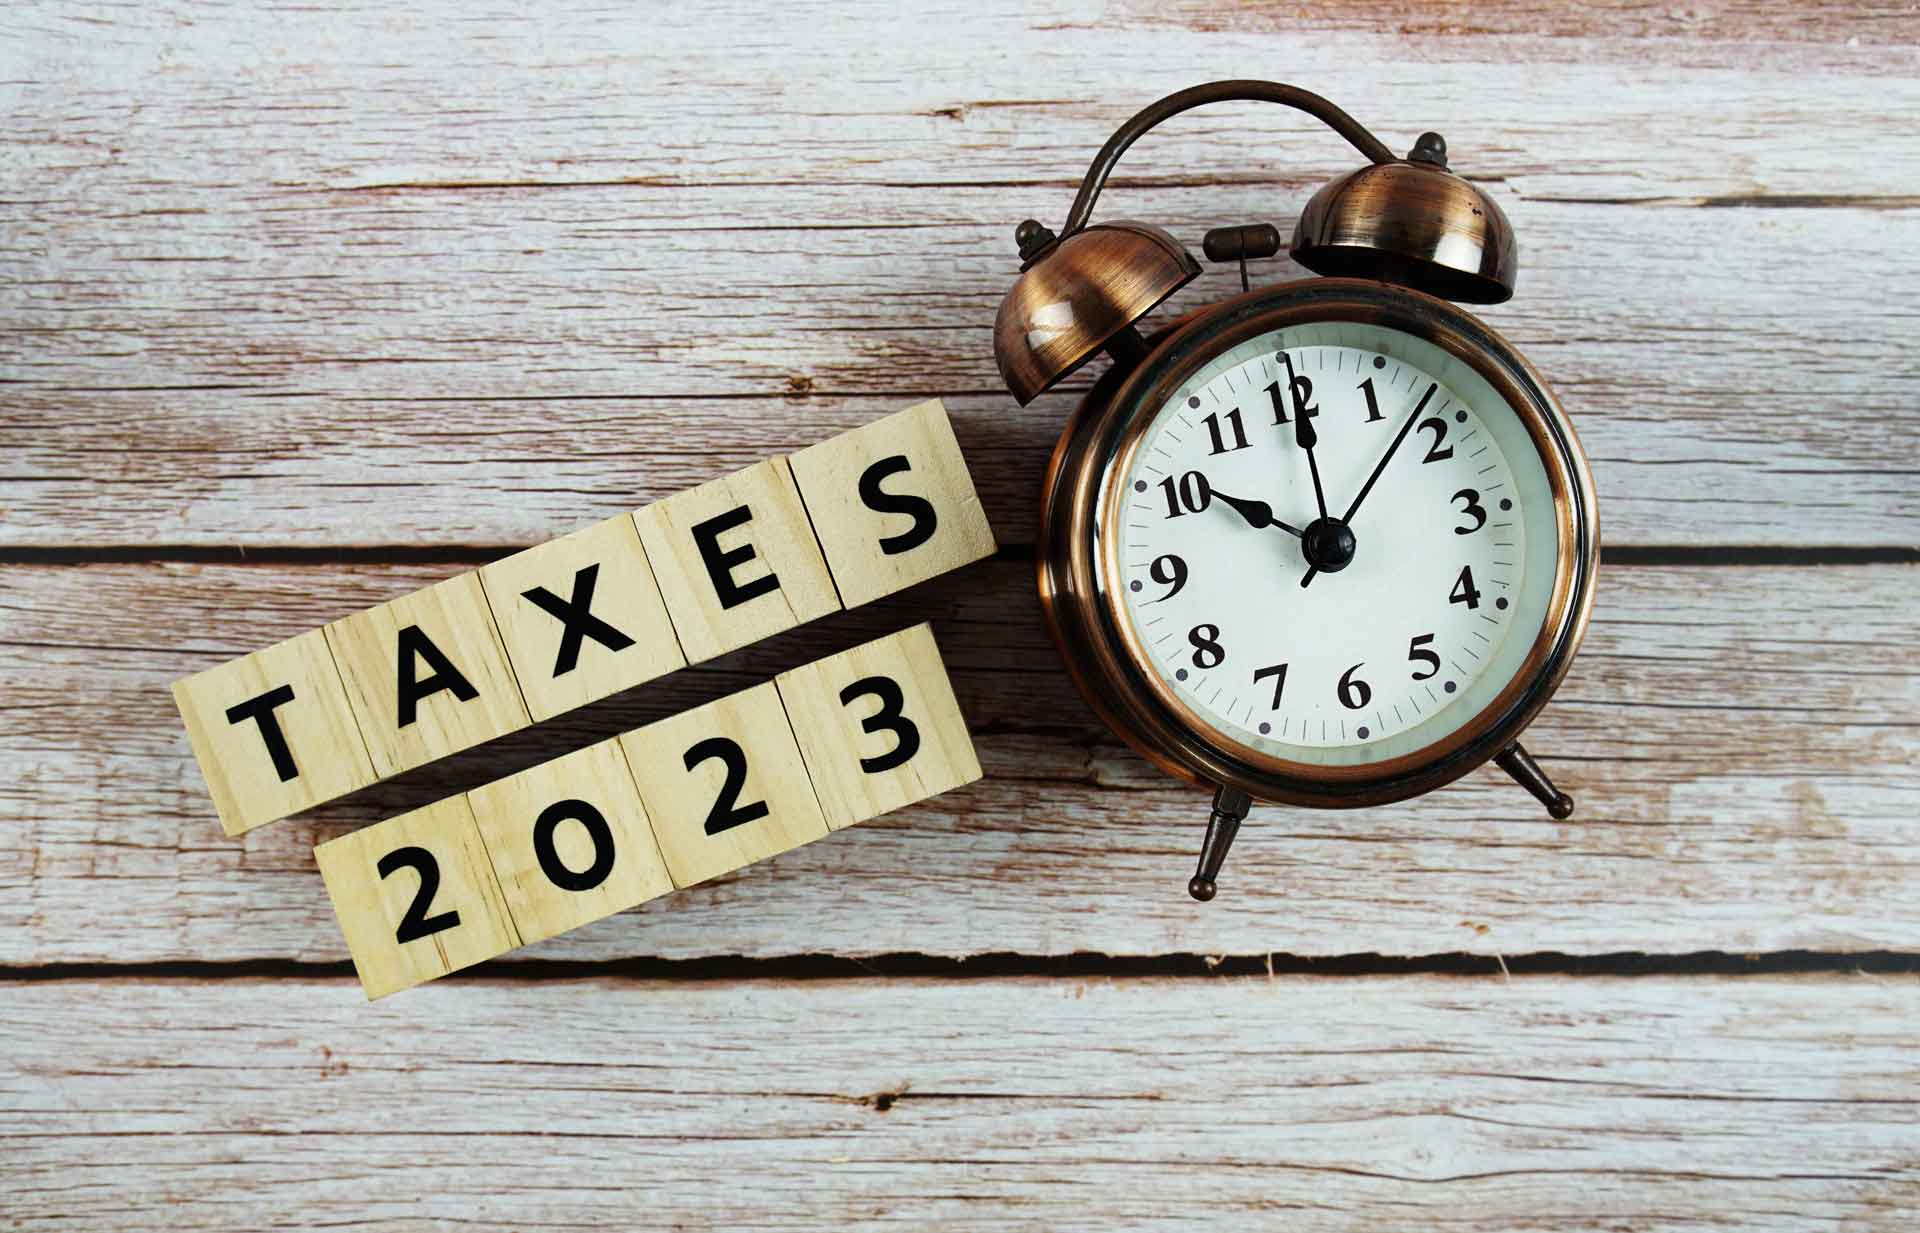 New BIR Tax Tables for 2023 Onwards